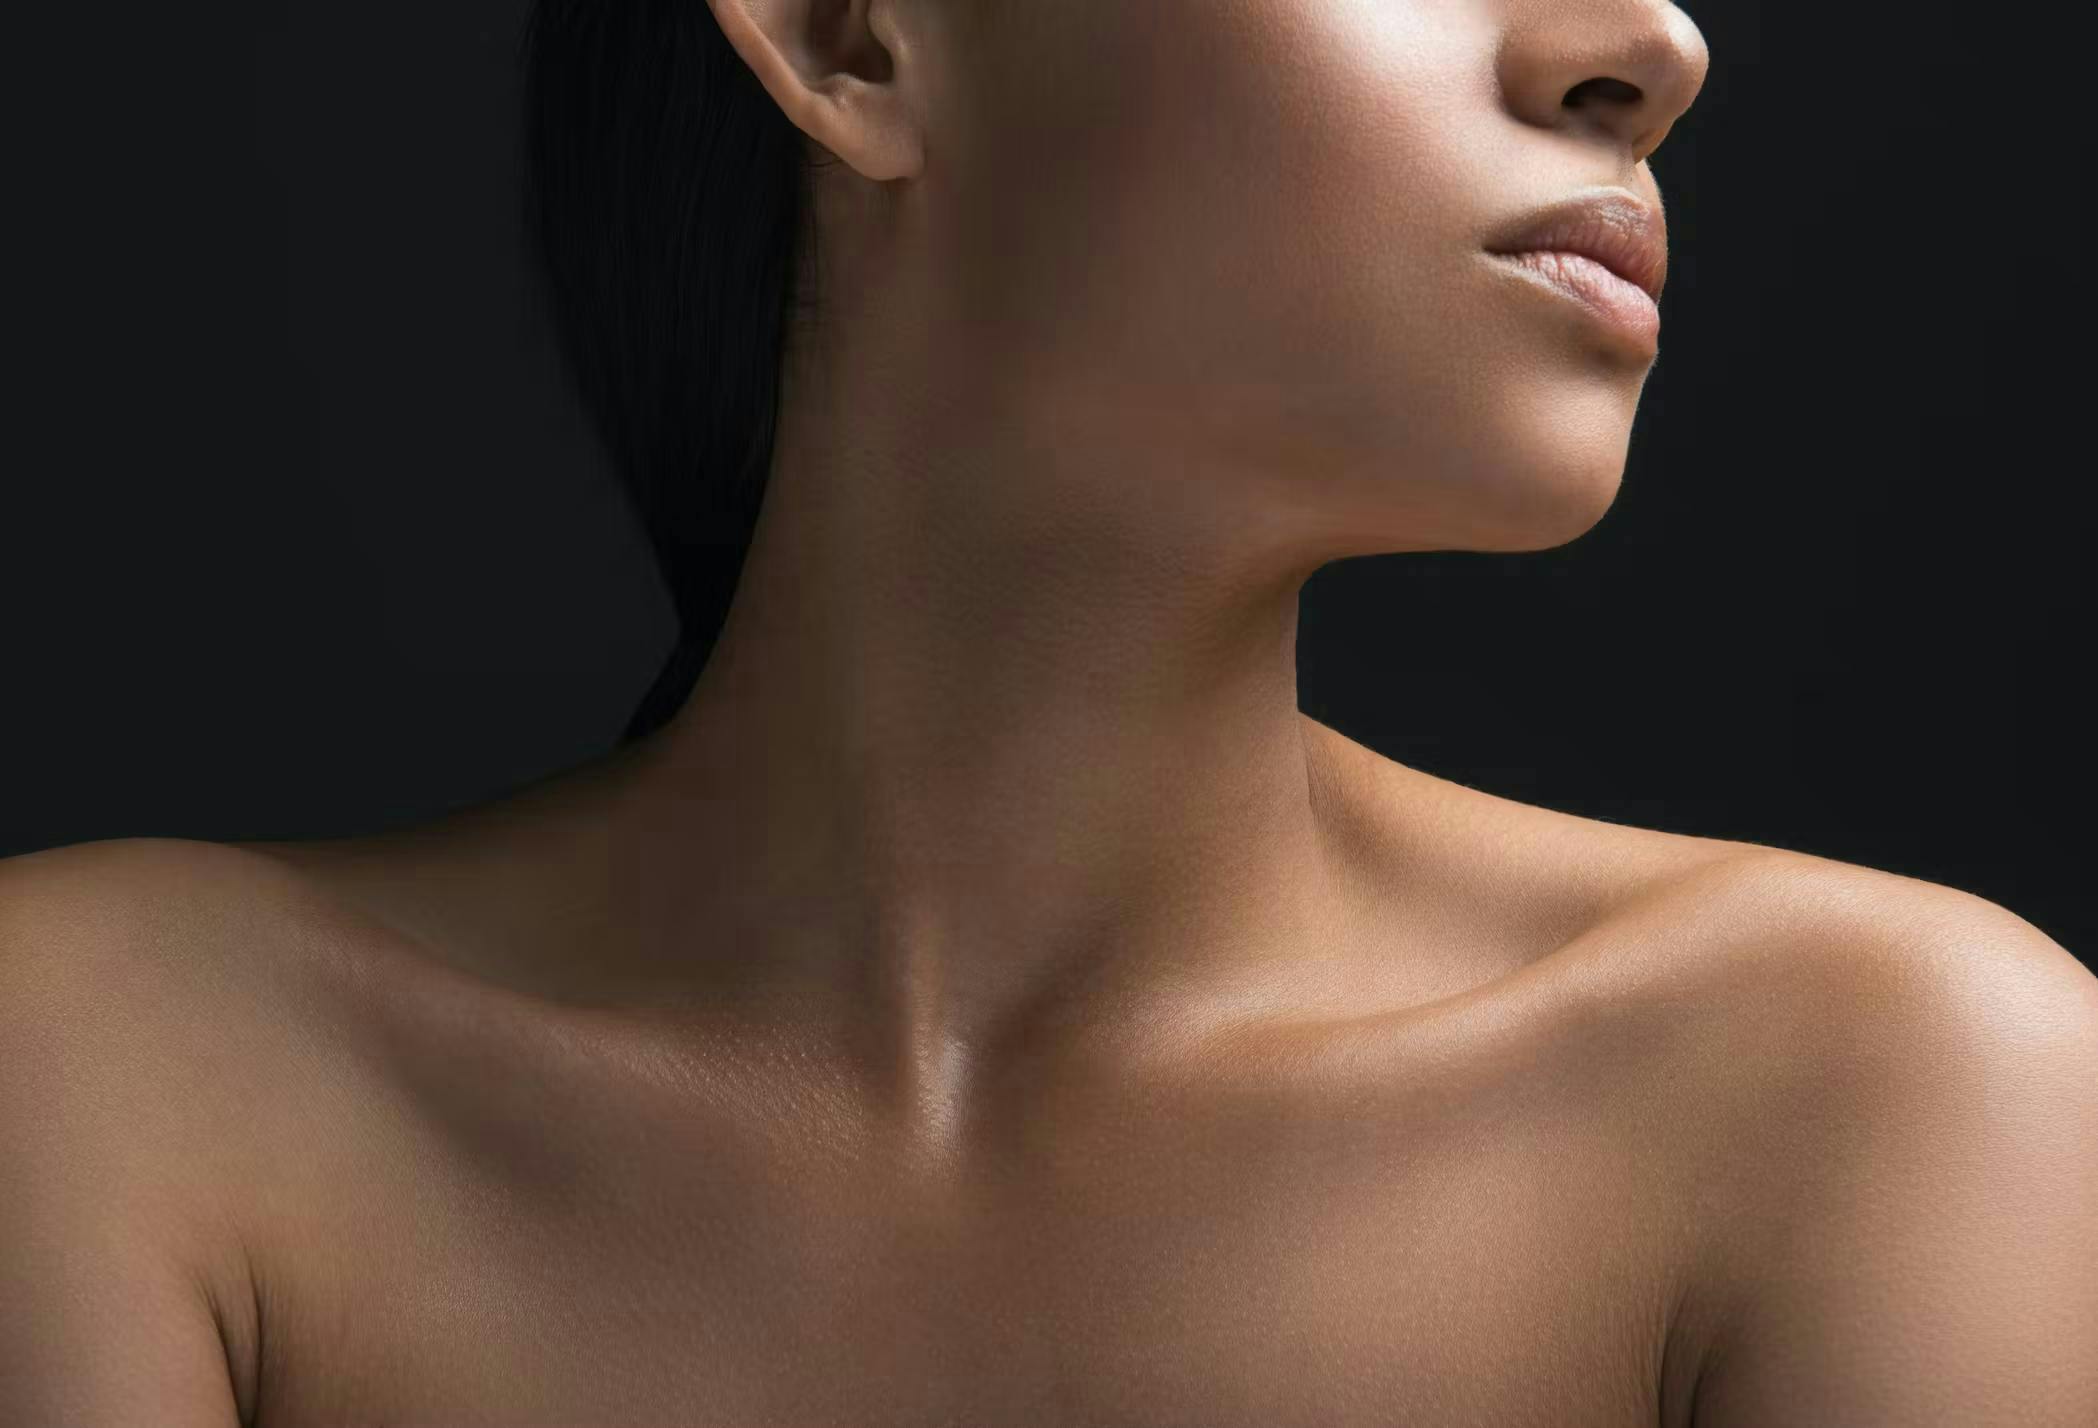 body part face head neck person adult female woman skin shoulder